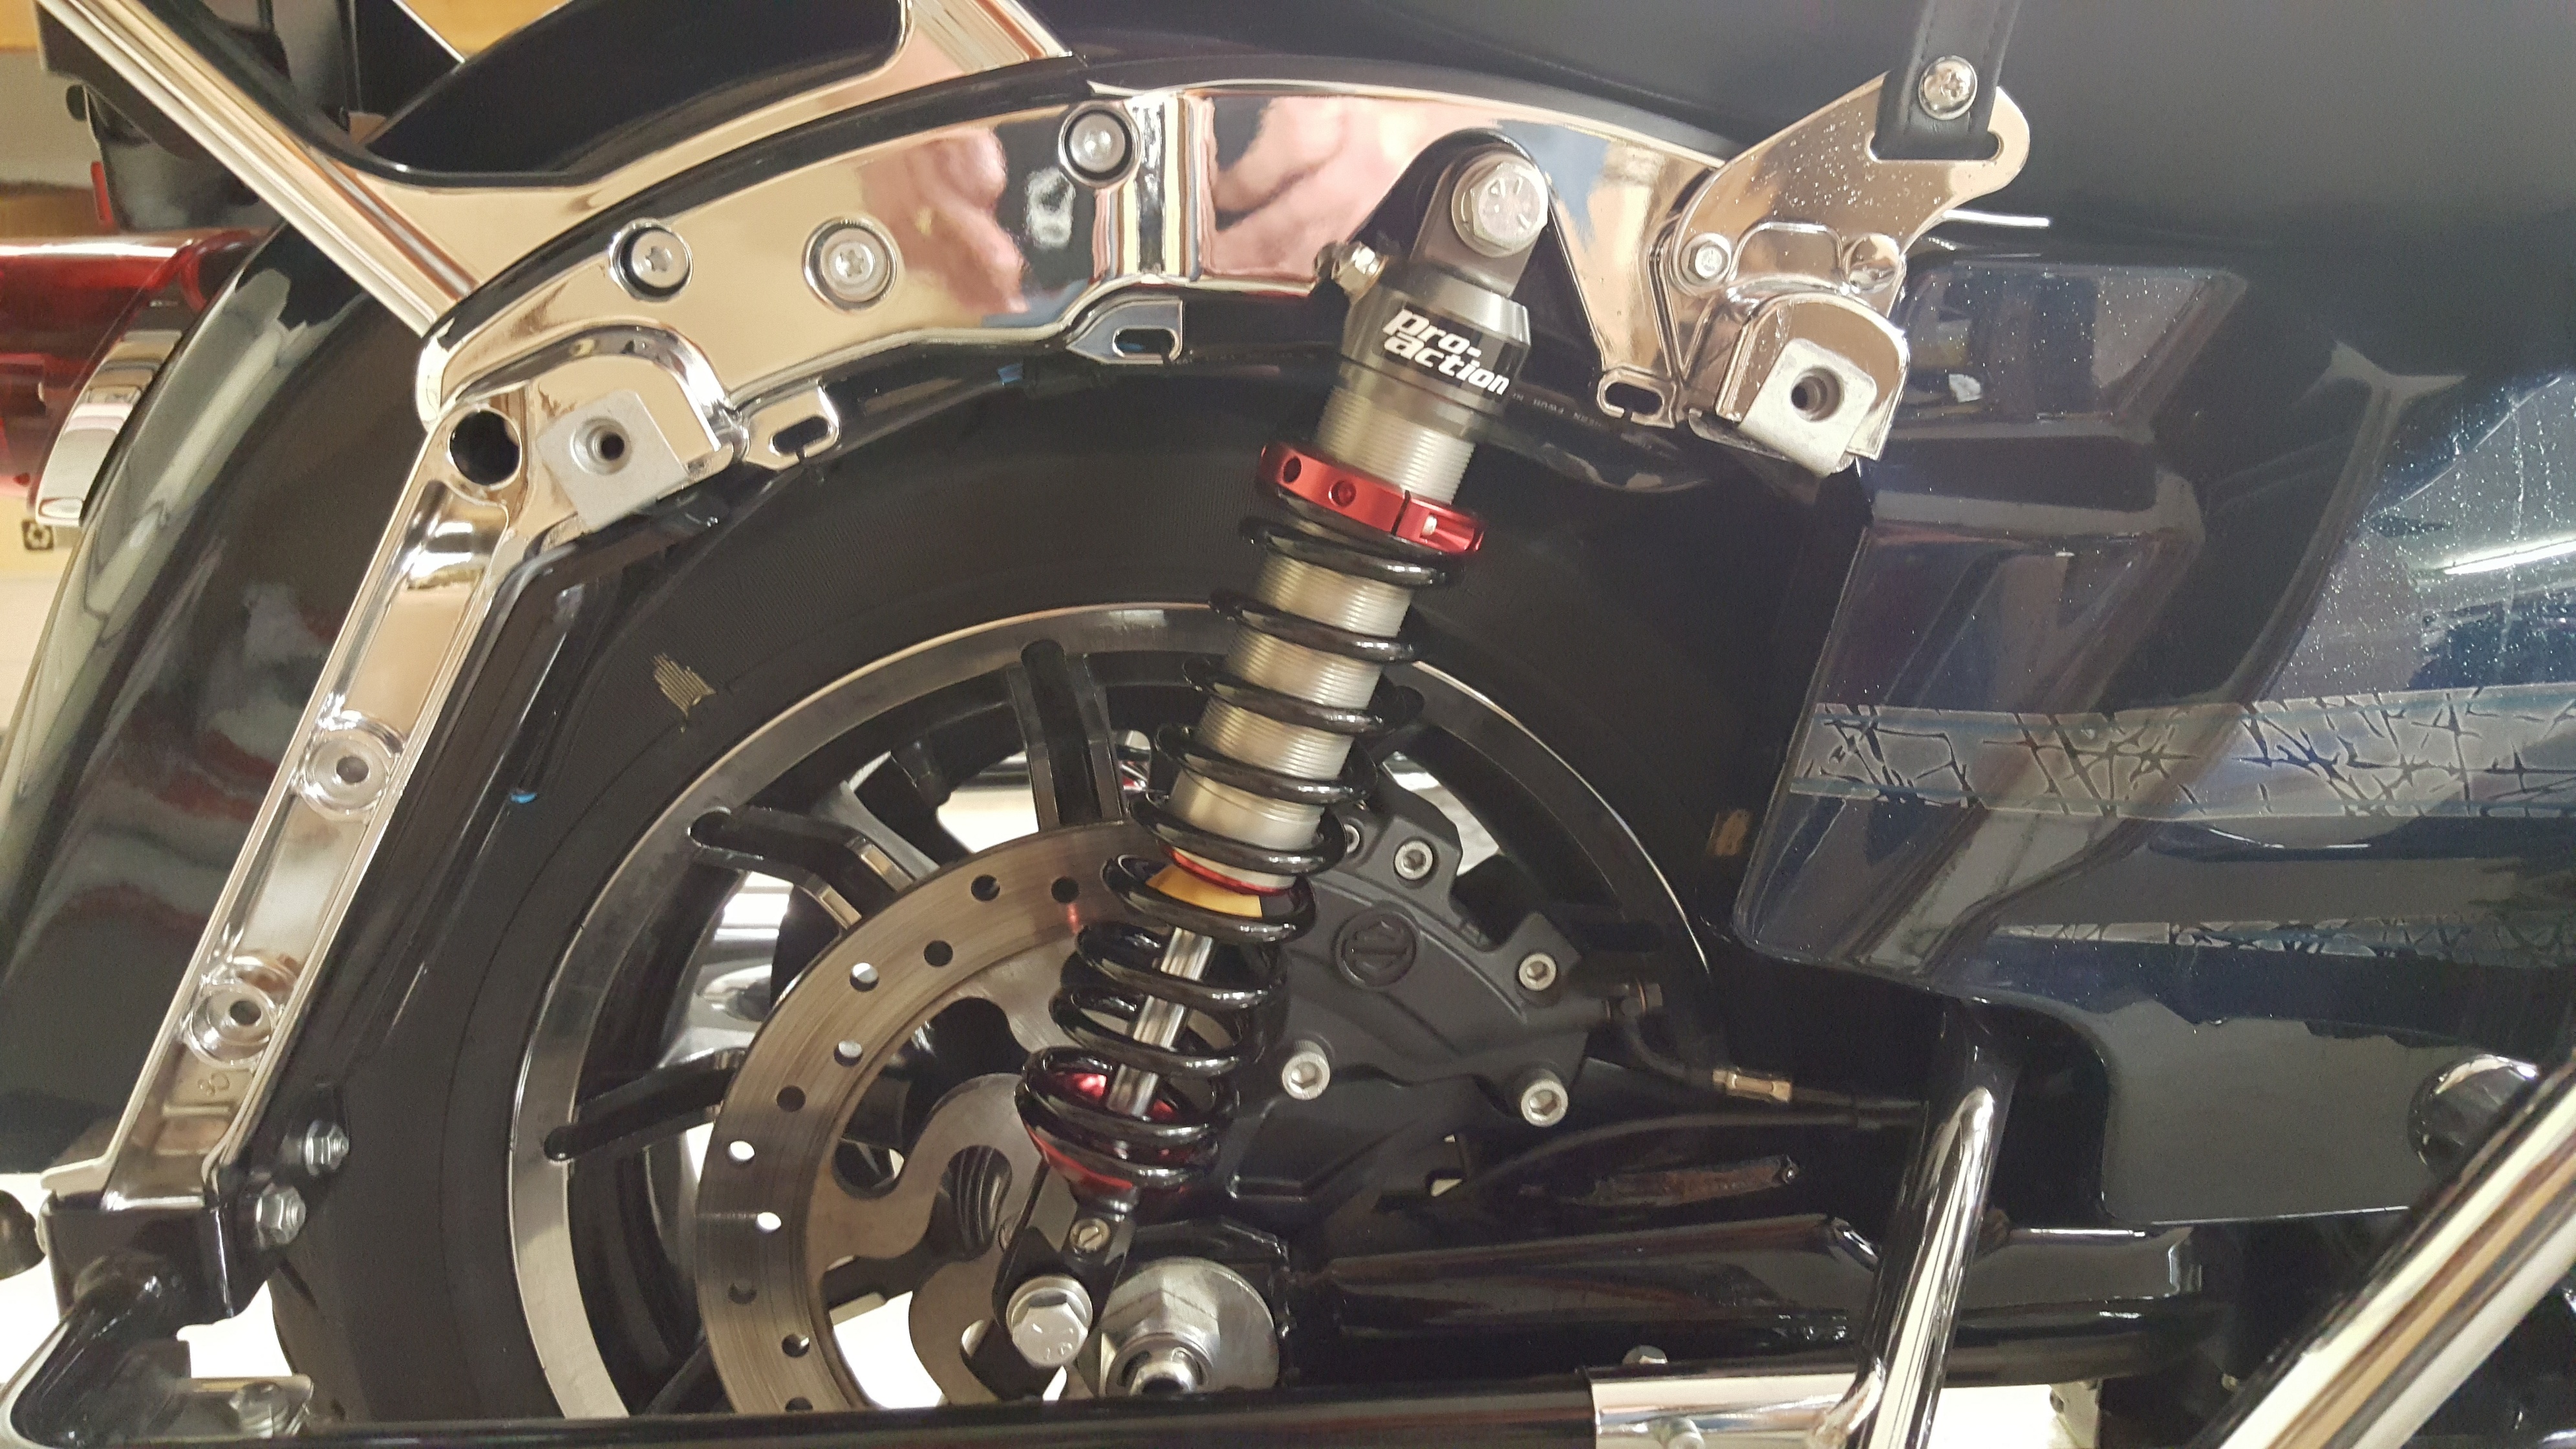  Touring  suspension  upgrade Harley Davidson Forums